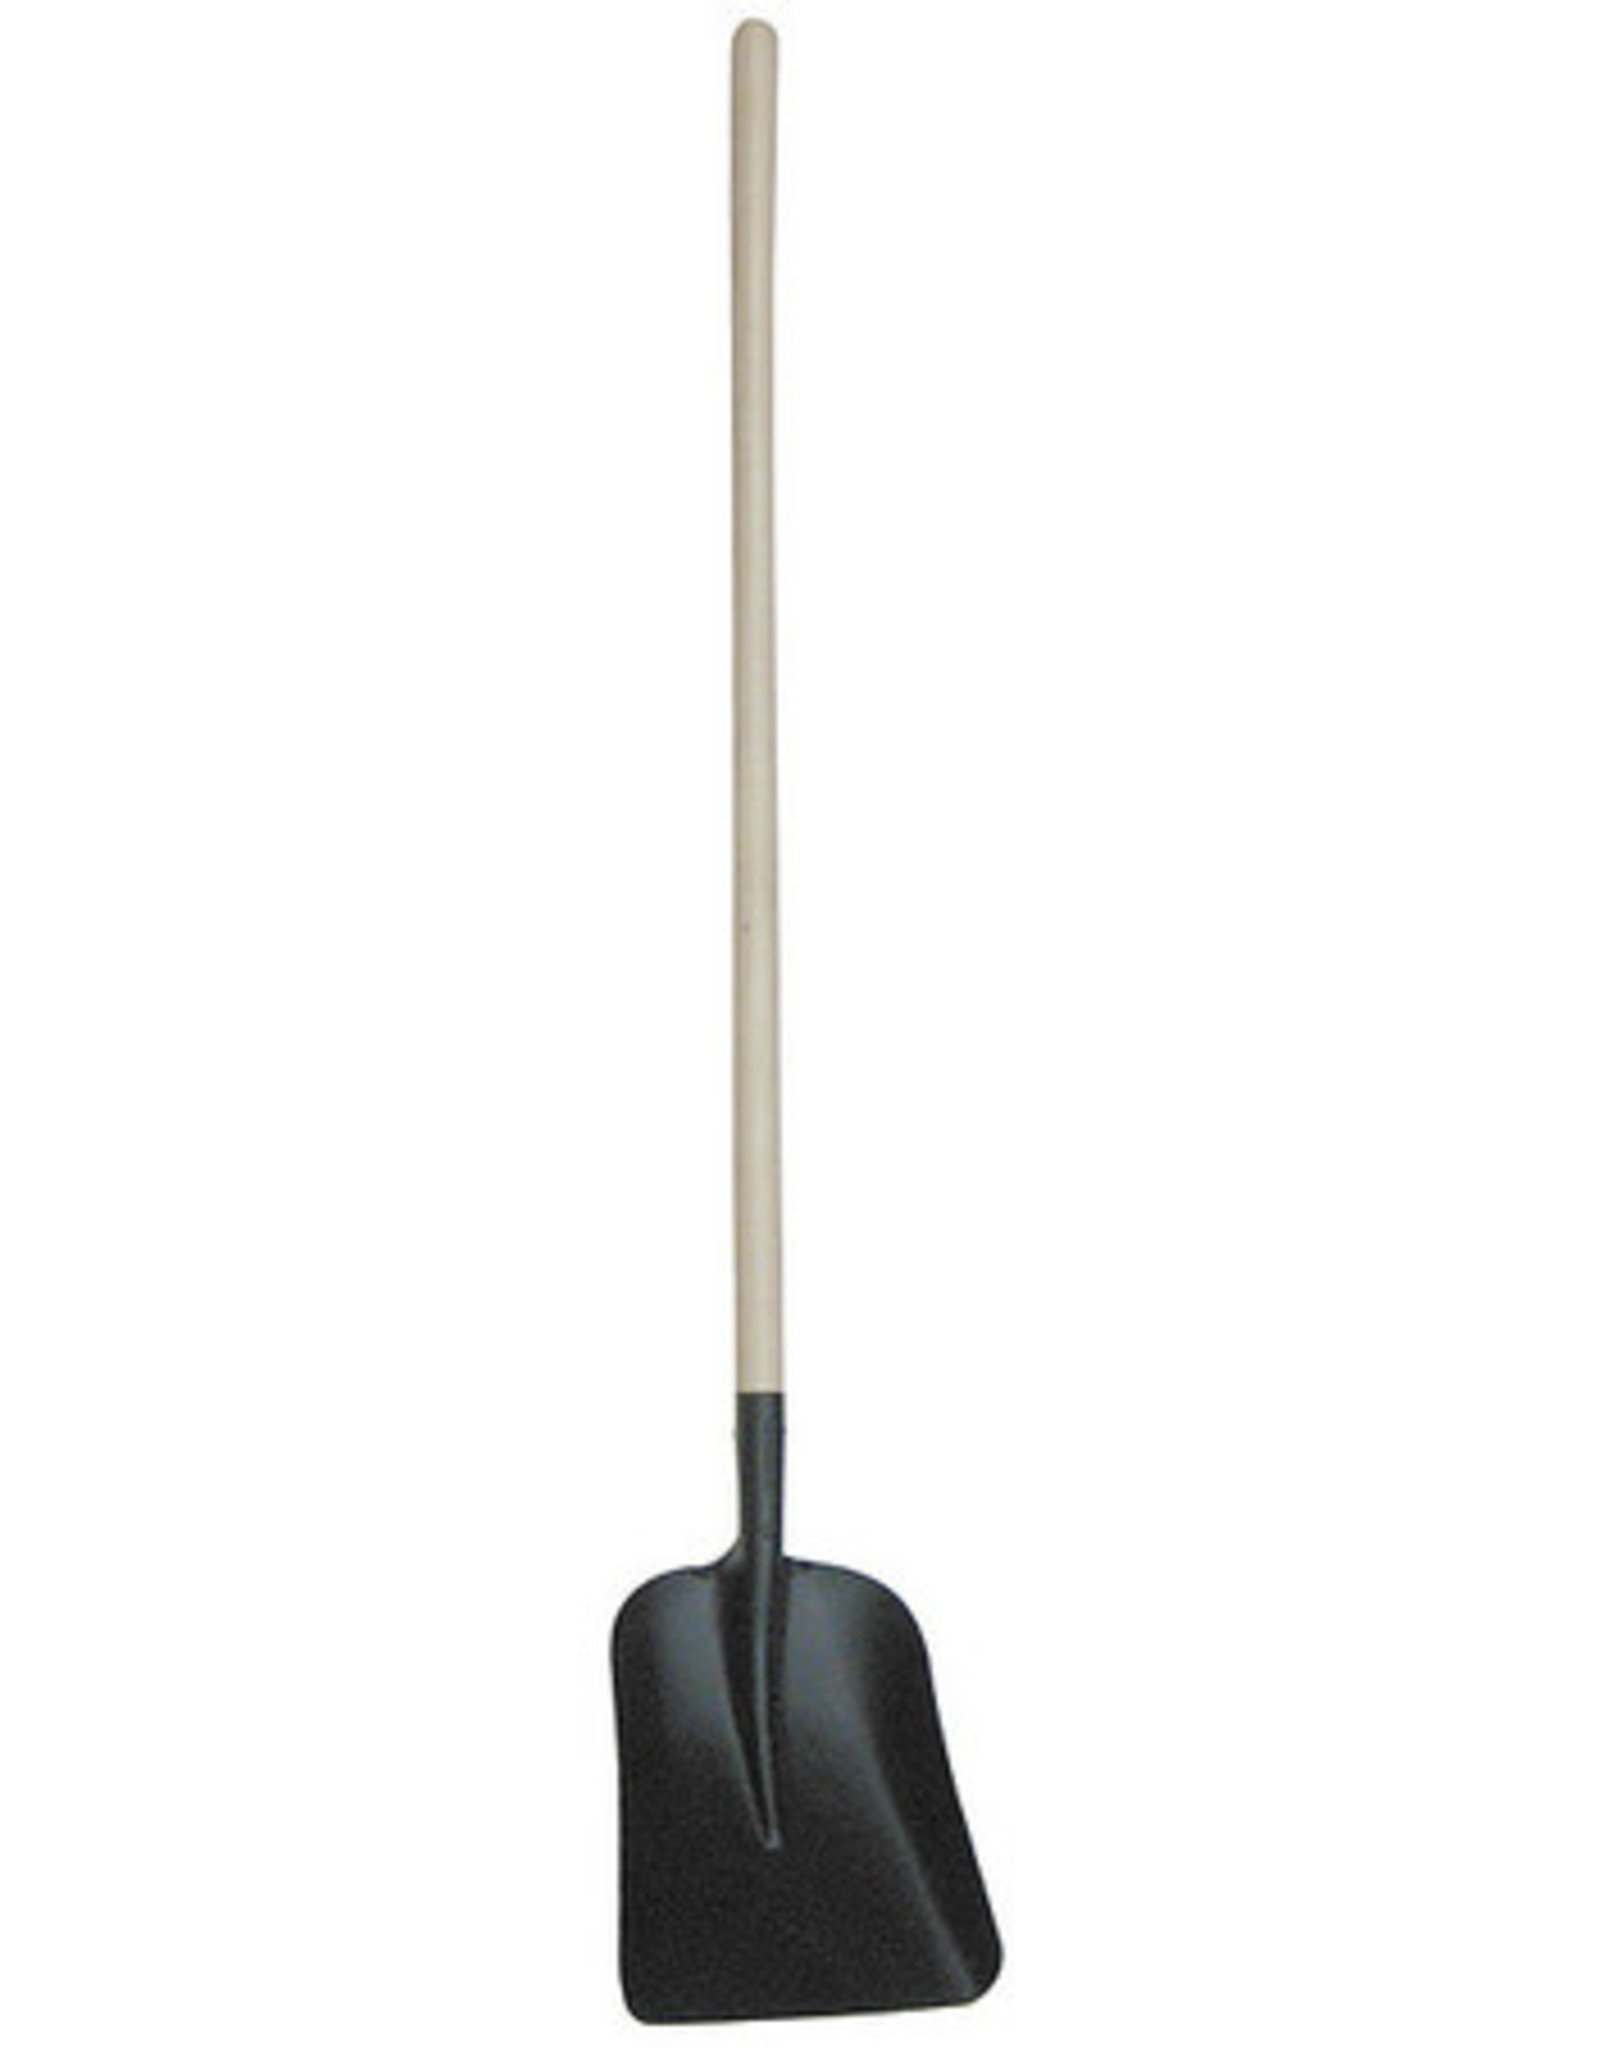 wooden handle shovel